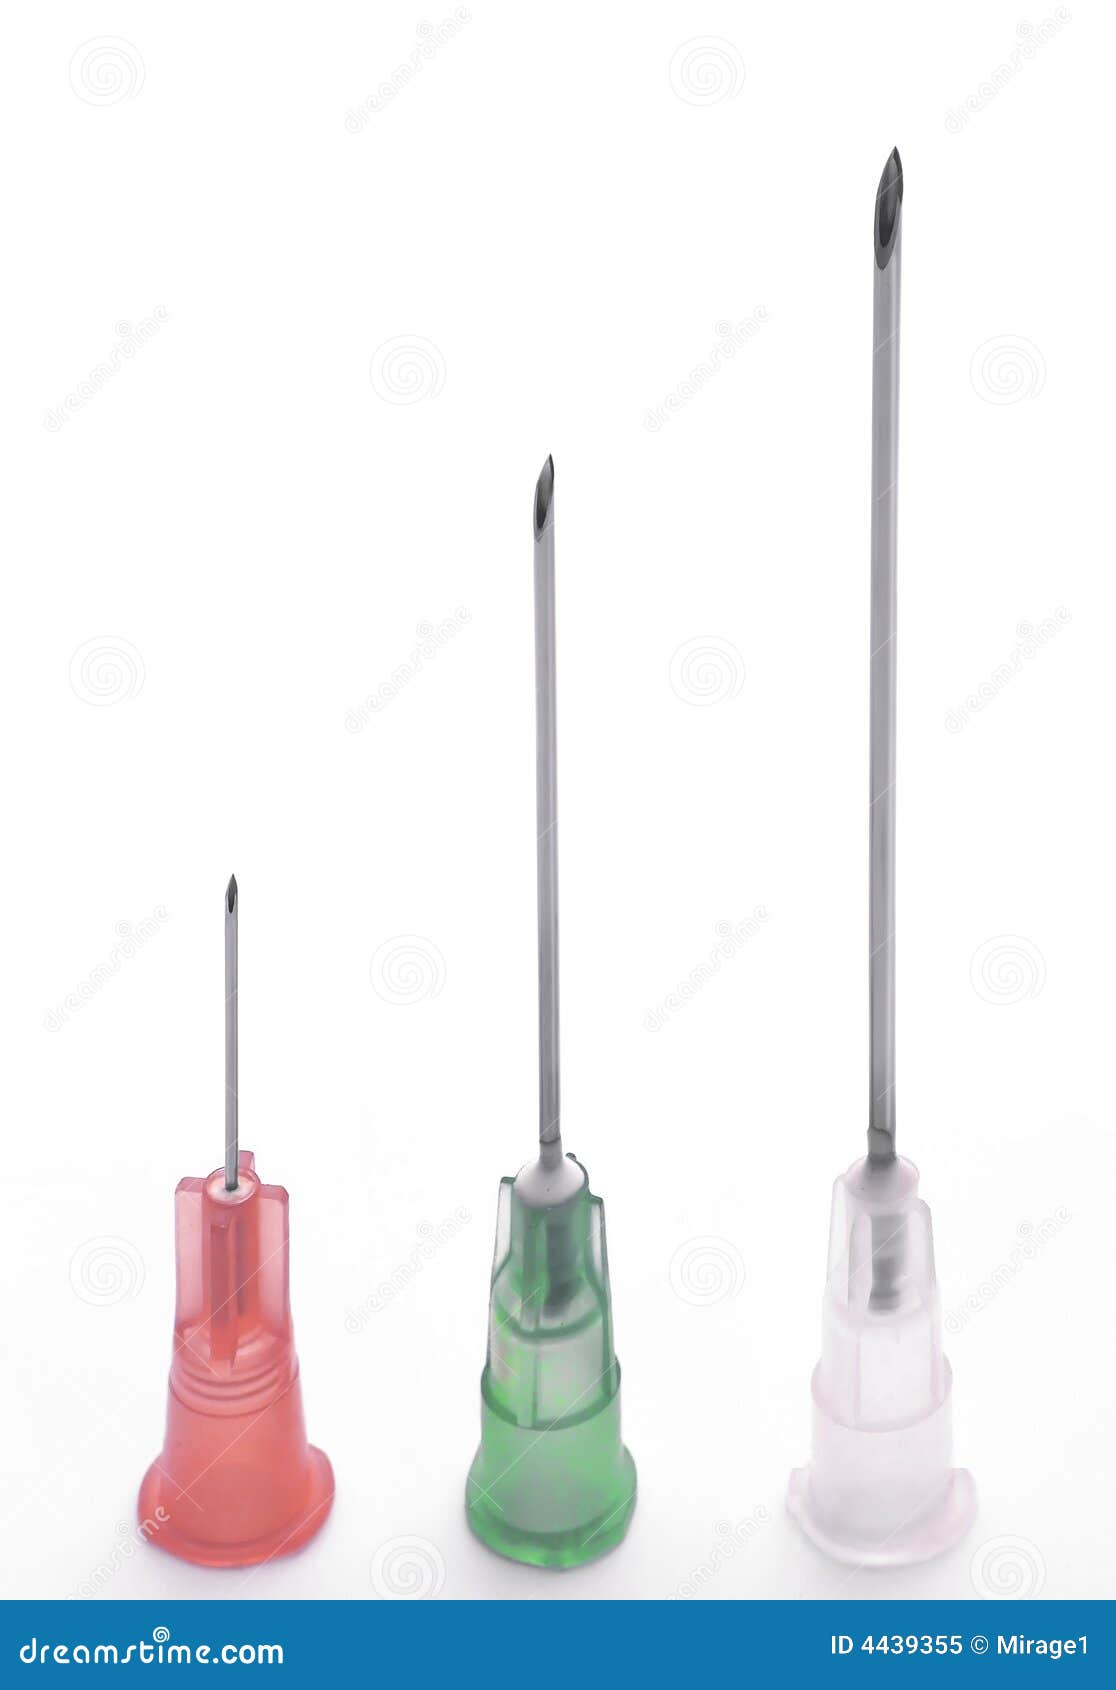 three hypodermic needles